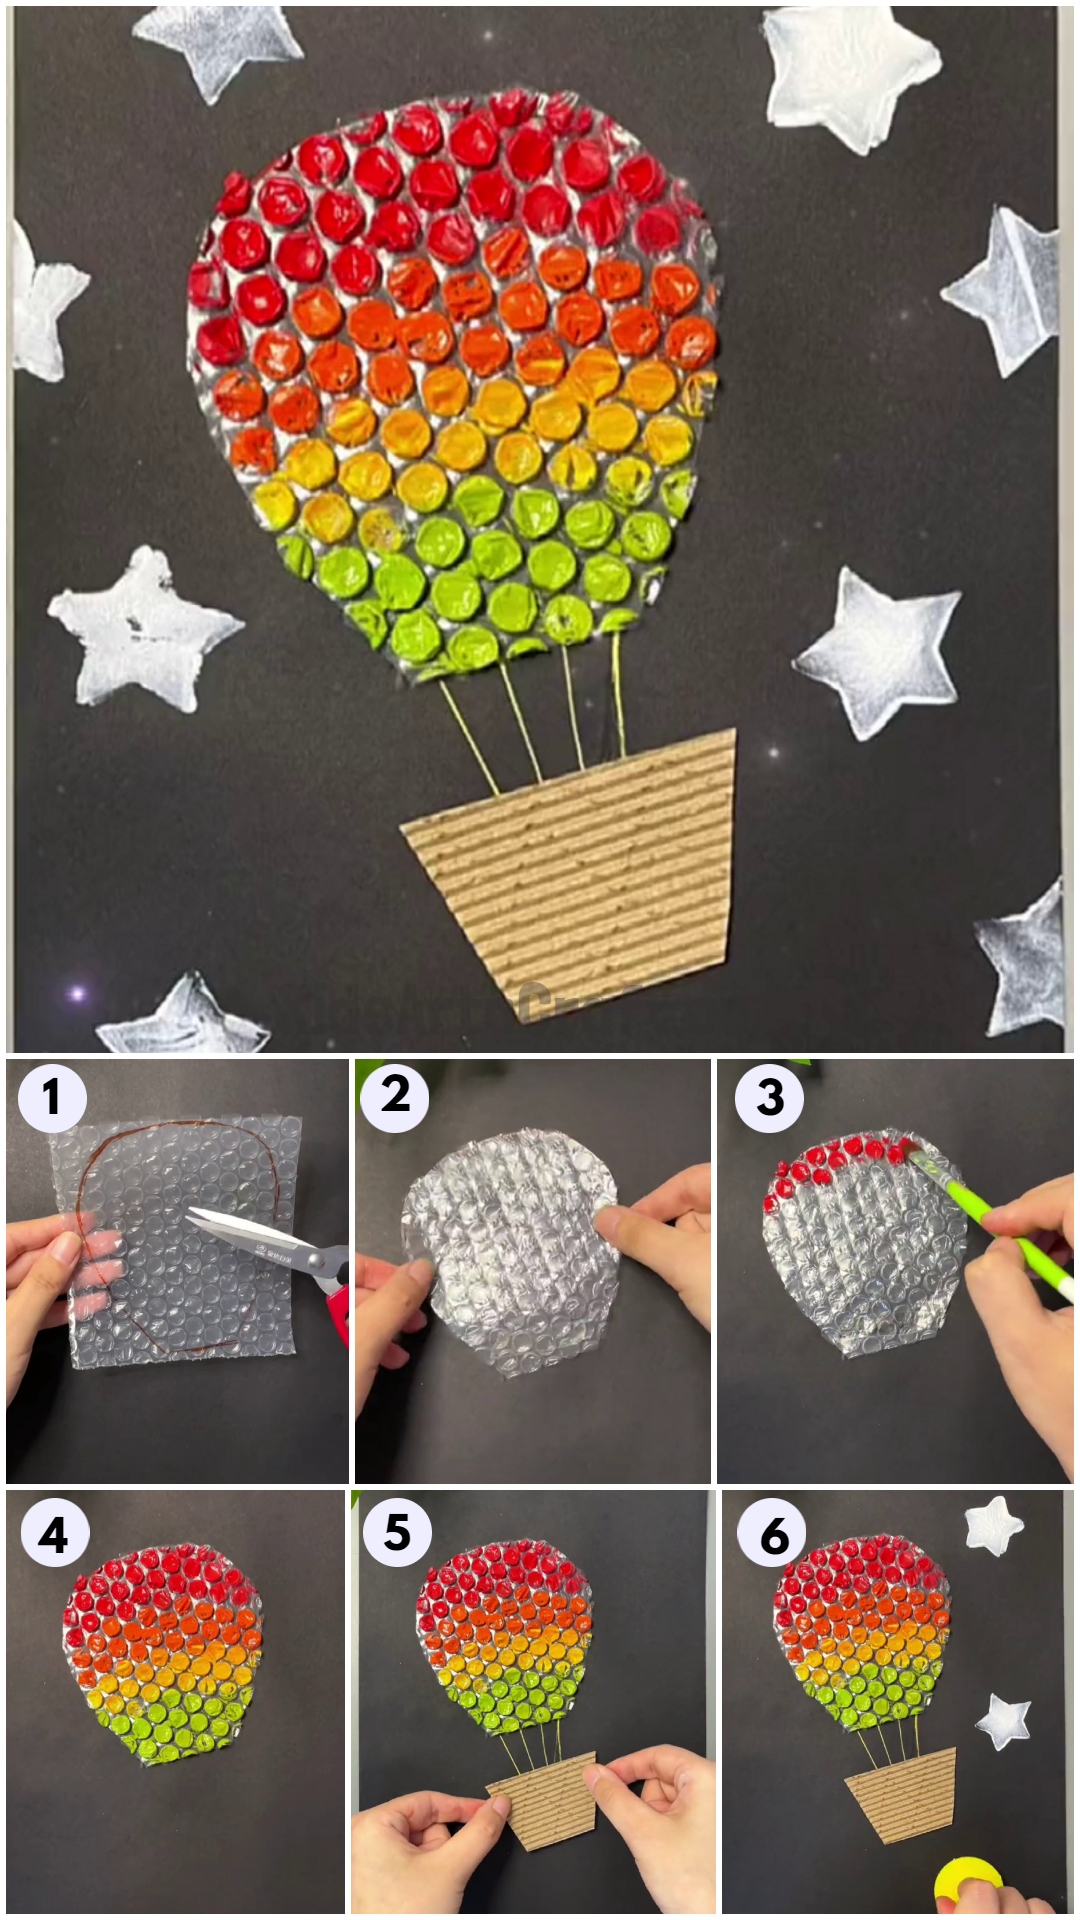 DIY Bubble Wrap Hot Air Balloon Craft For Kids